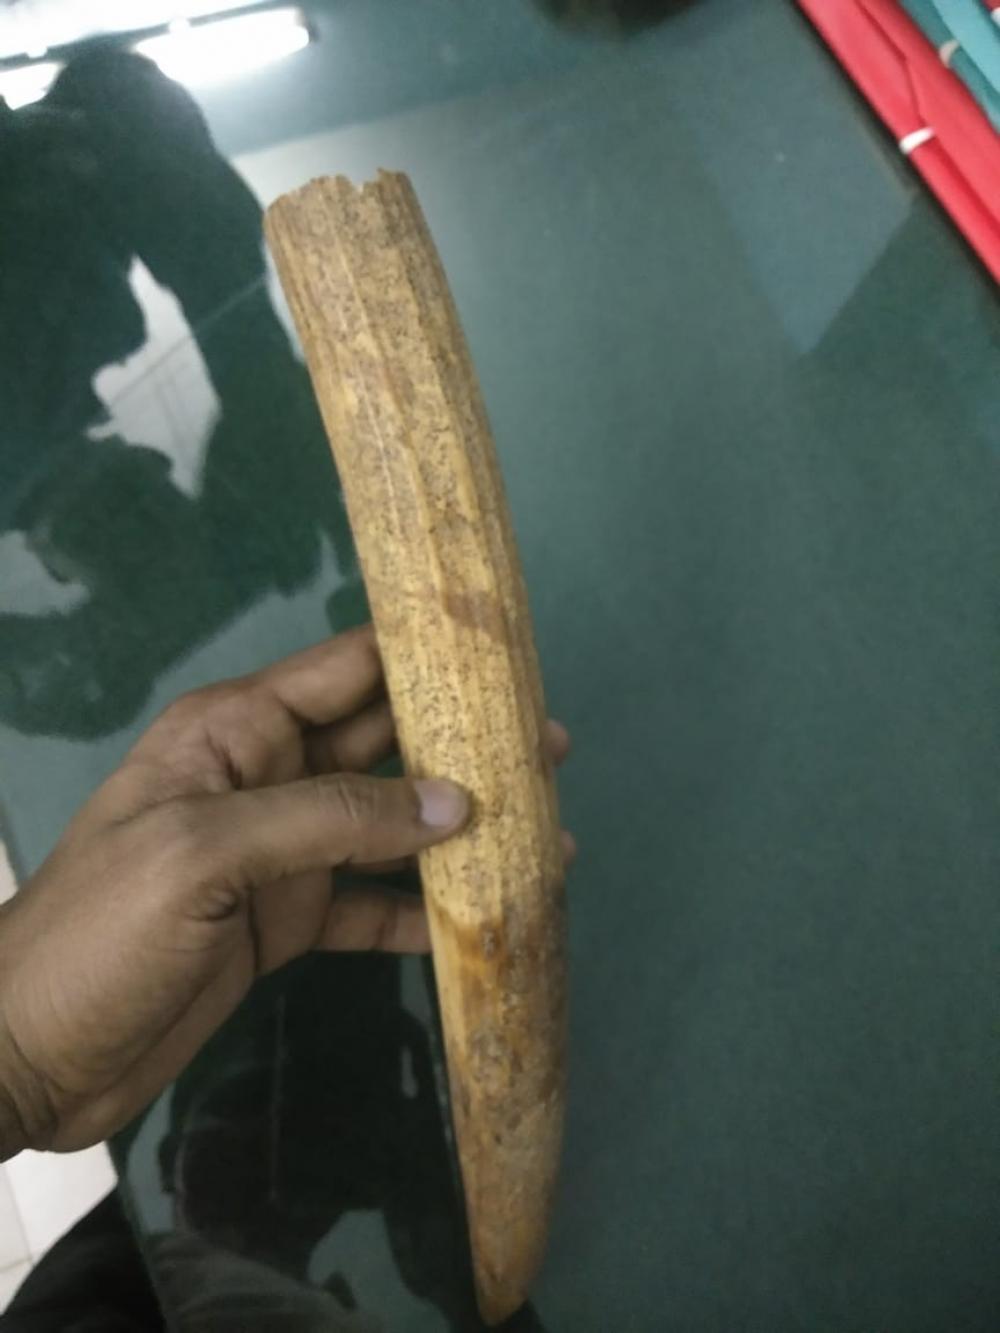 The Weekend Leader - Rare Atlantic walrus tusk seized in Maha's Ratnagiri, probe launched